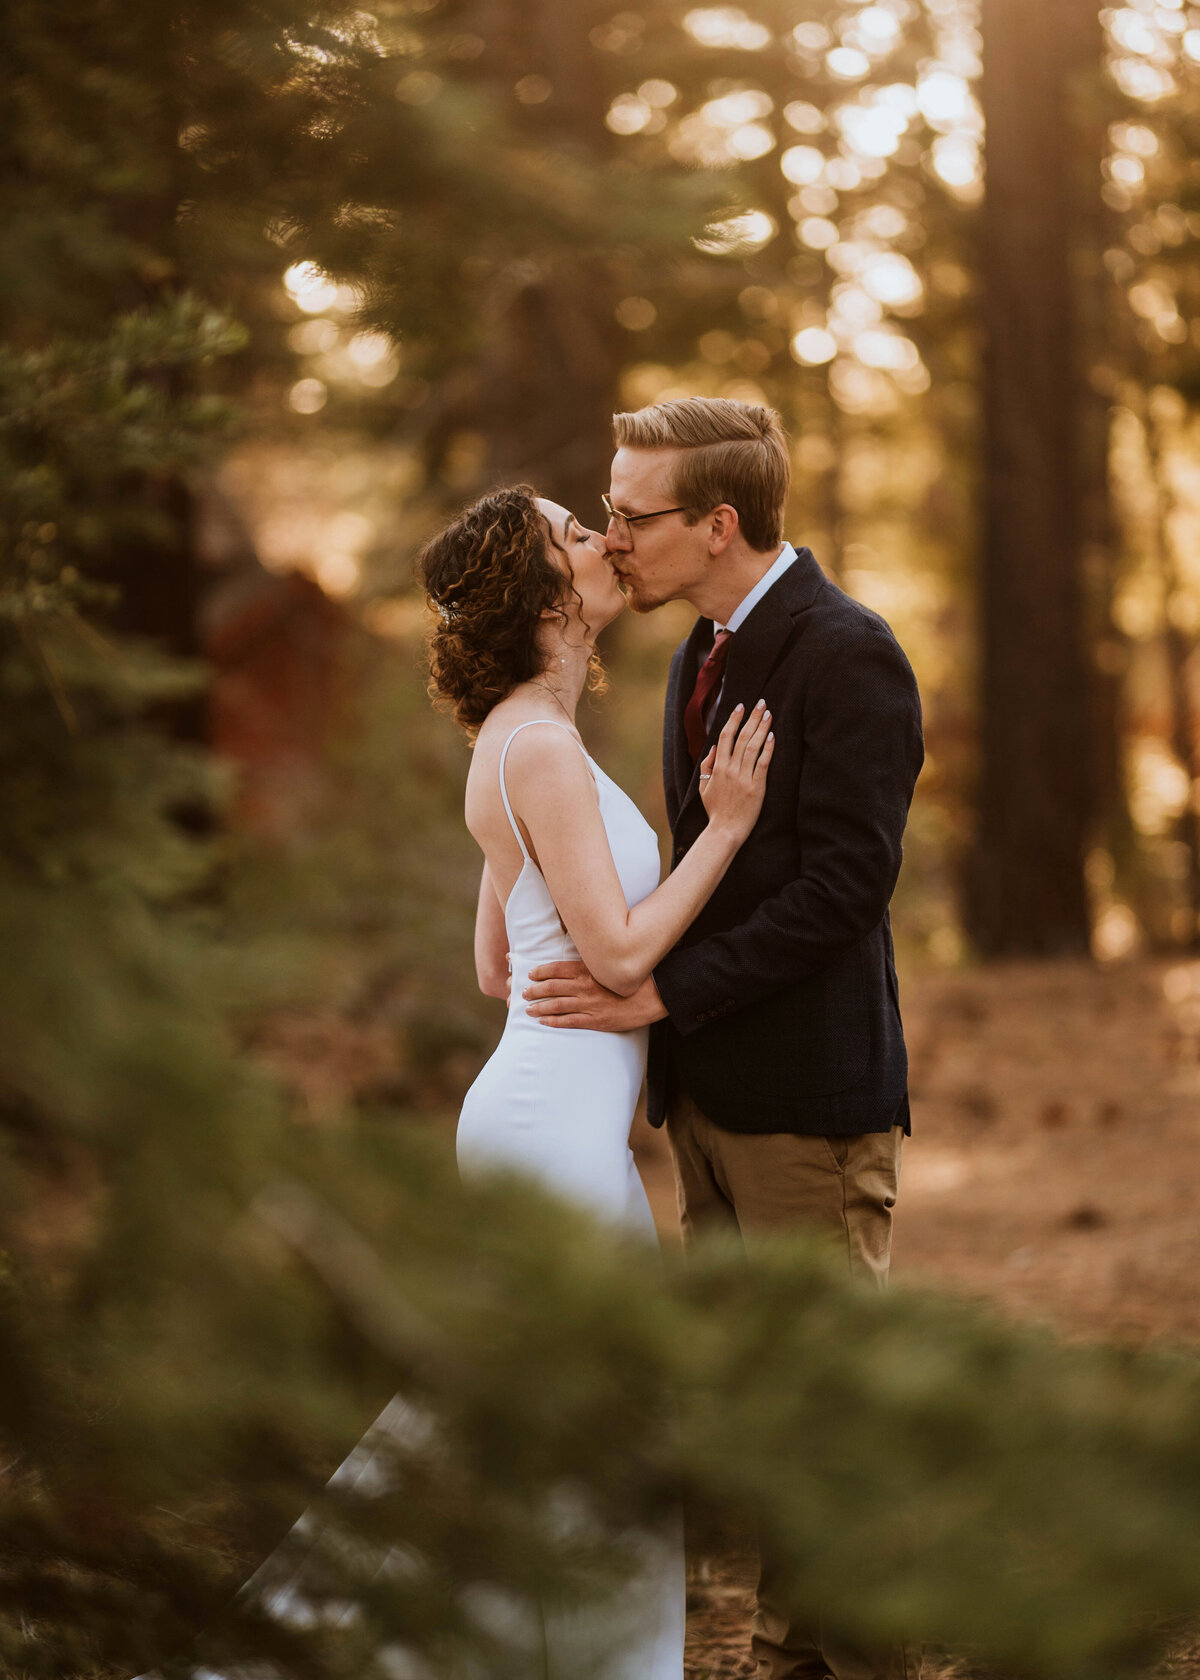 Tahoe elopement photography, elopement photographer in Tahoe, professional elopement photos